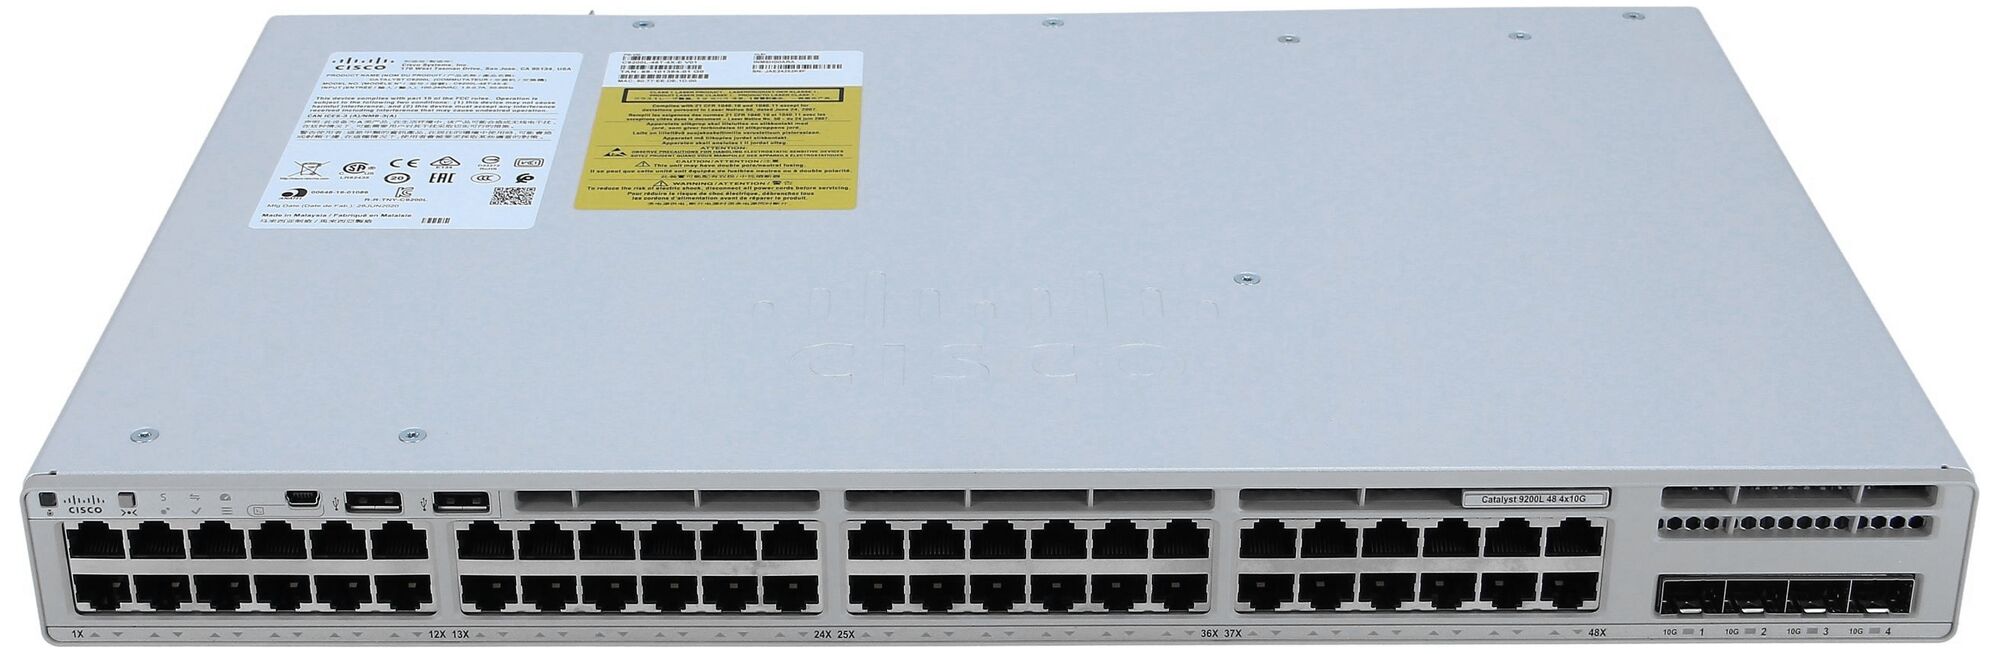 Коммутатор Cisco Cisco 9200 C9200L-48T-4X-E c9200l-48t-4x-e/Управляемый Layer 3